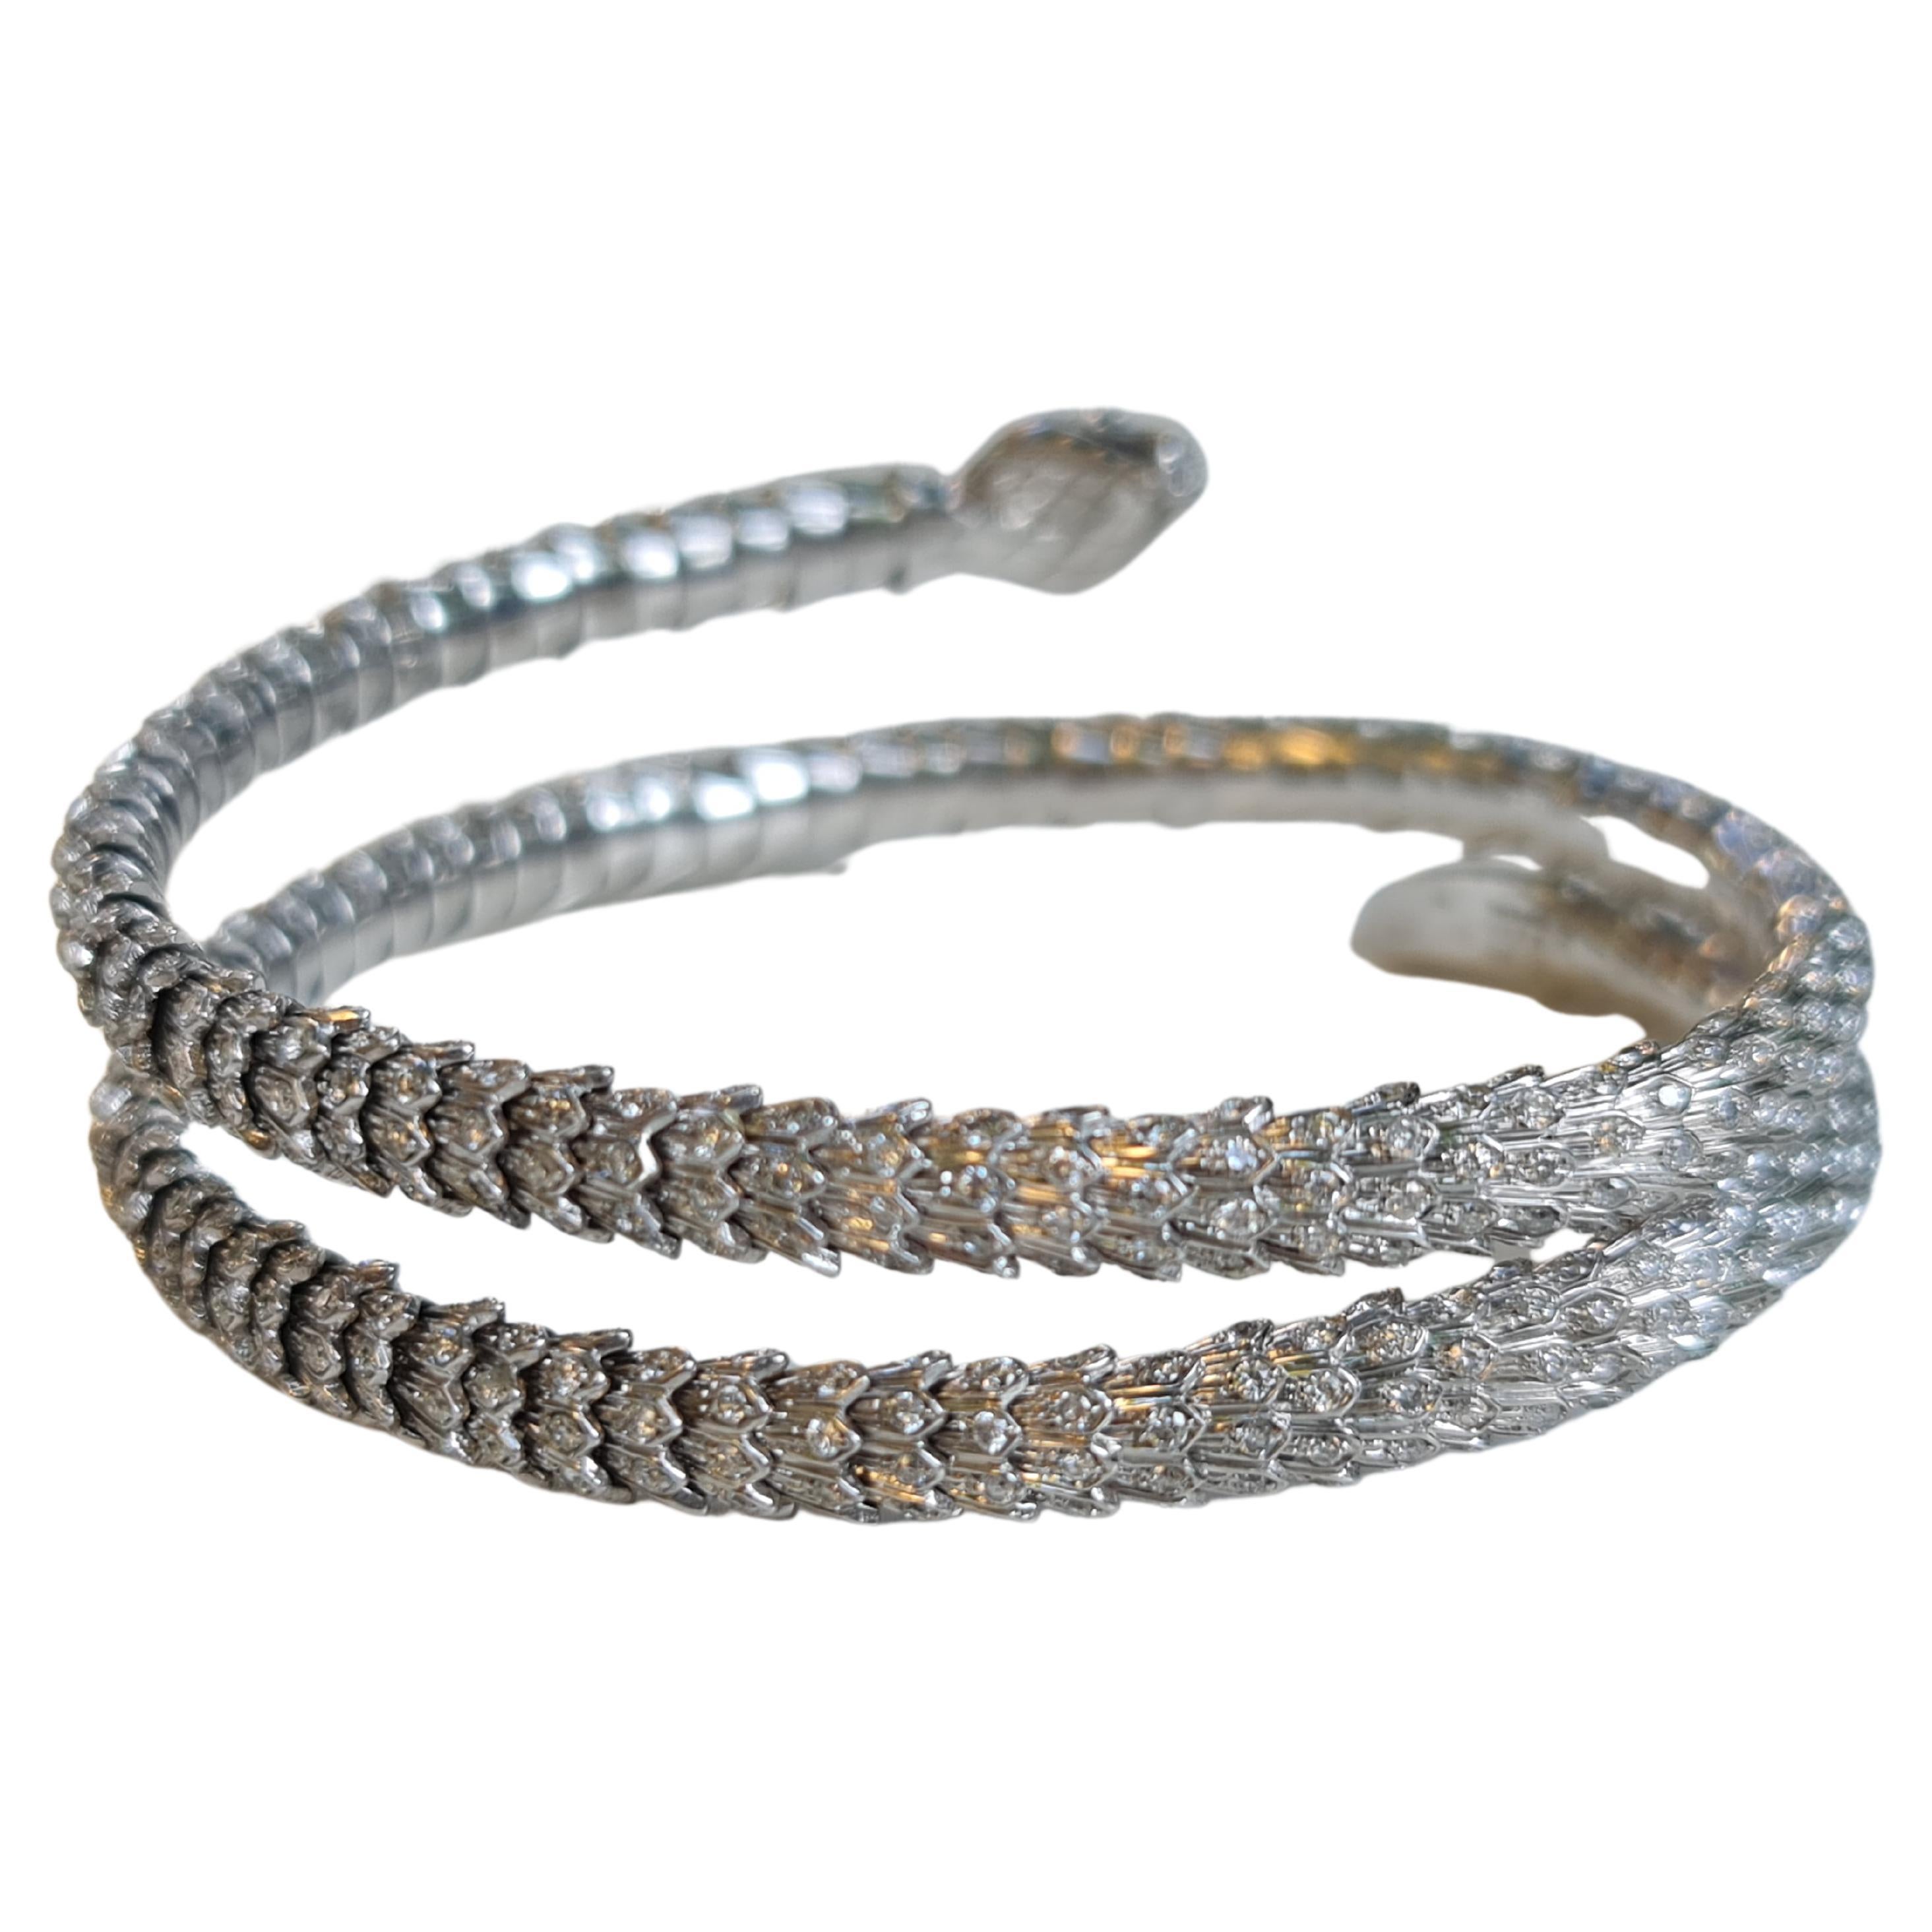 Serpenti Bracelet 5.65 Carat Natural Diamonds, 18K White Gold 56 Gram